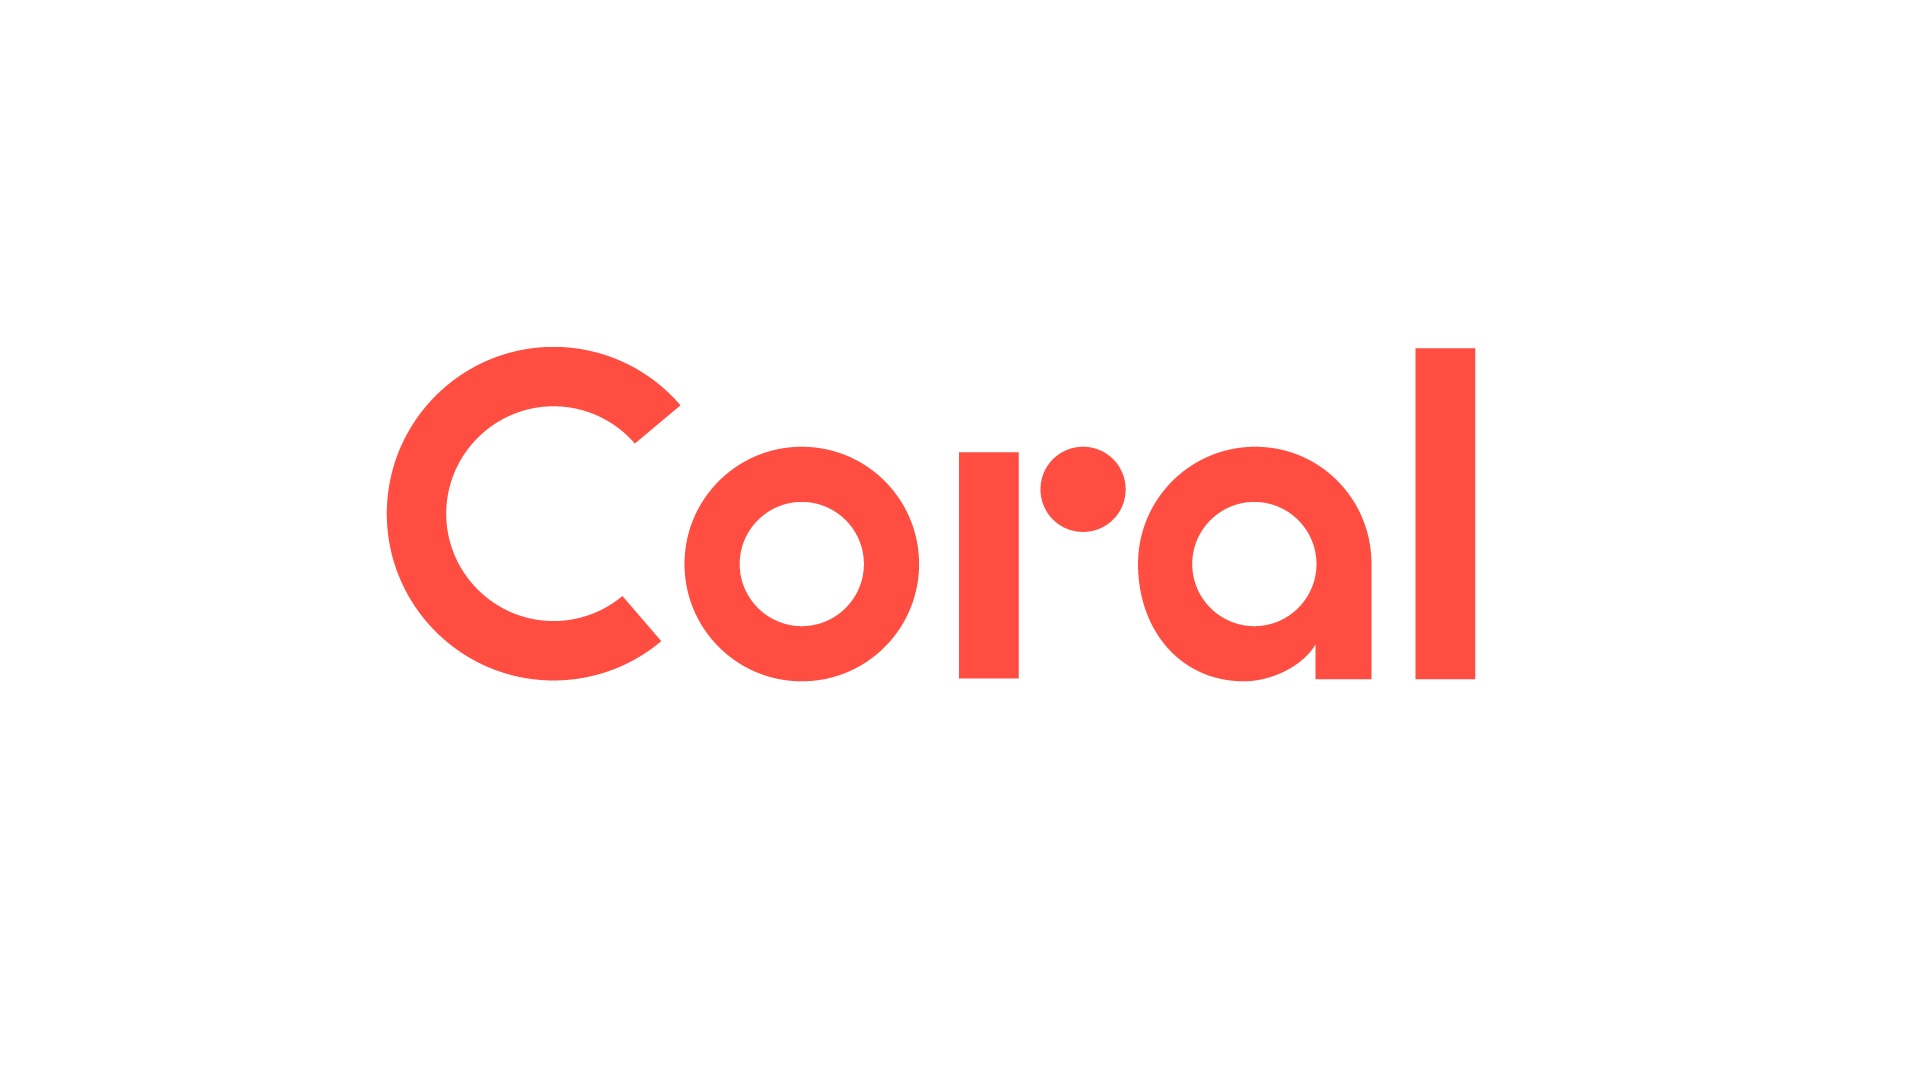 Google coral. Coral Travel логотип. Логотип фирмы Coral. Корал логотип туроператор. Corall логотип вектор.